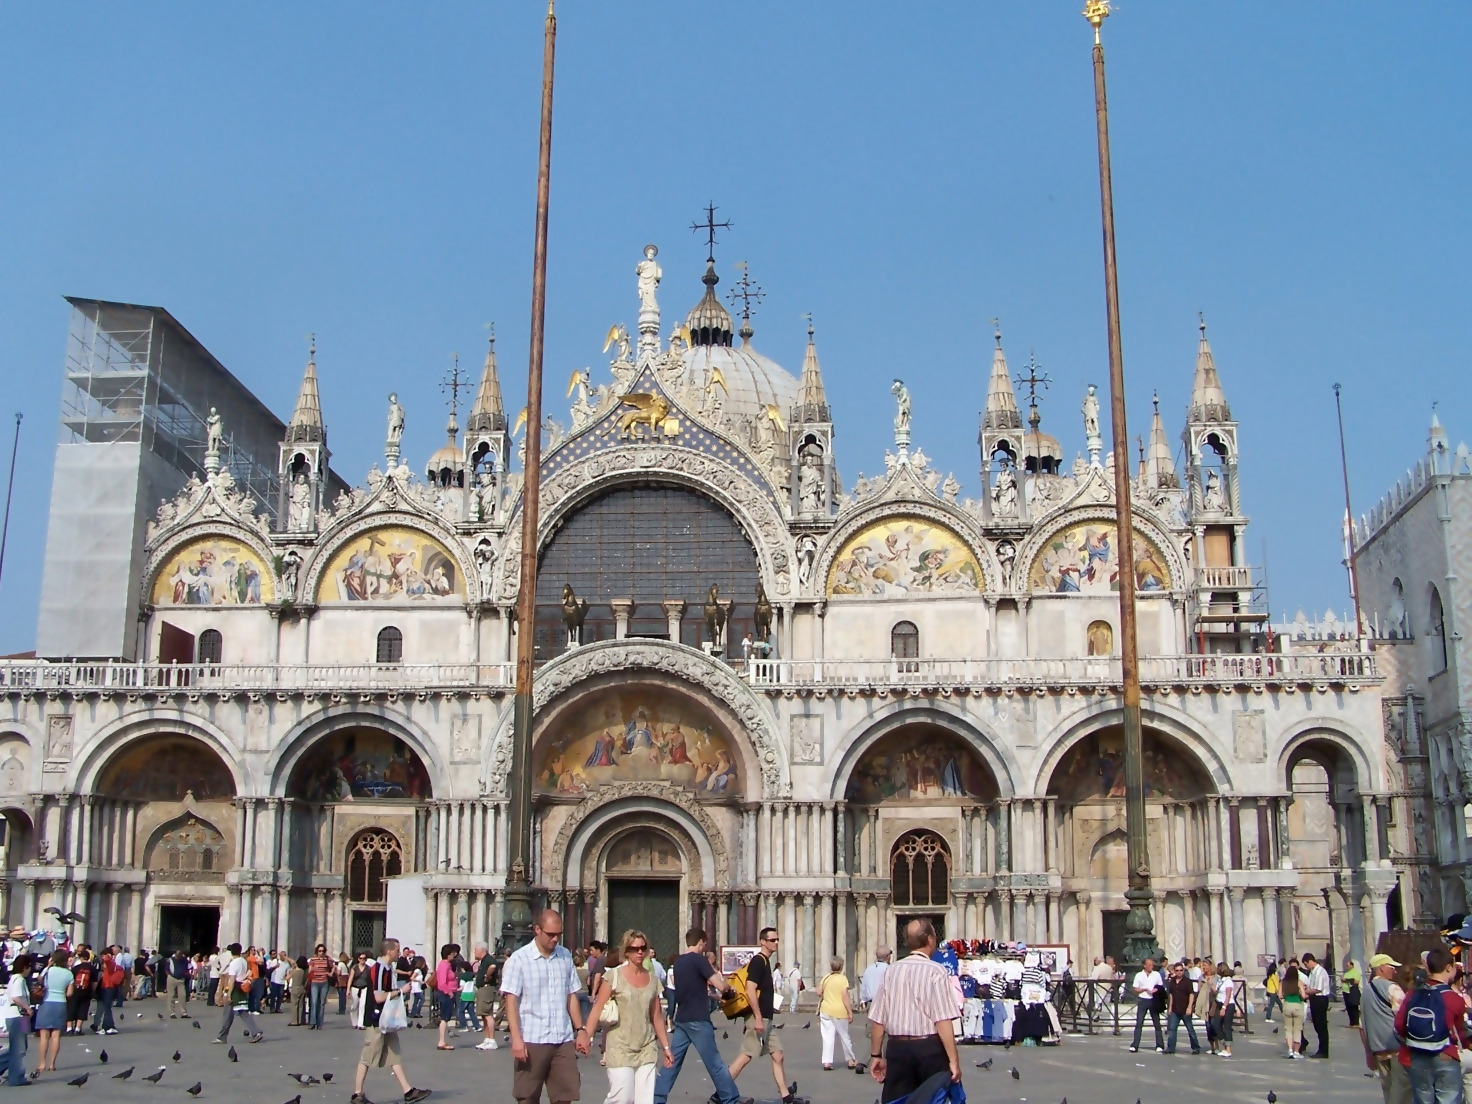 St. Mark’s Basilica in Venice